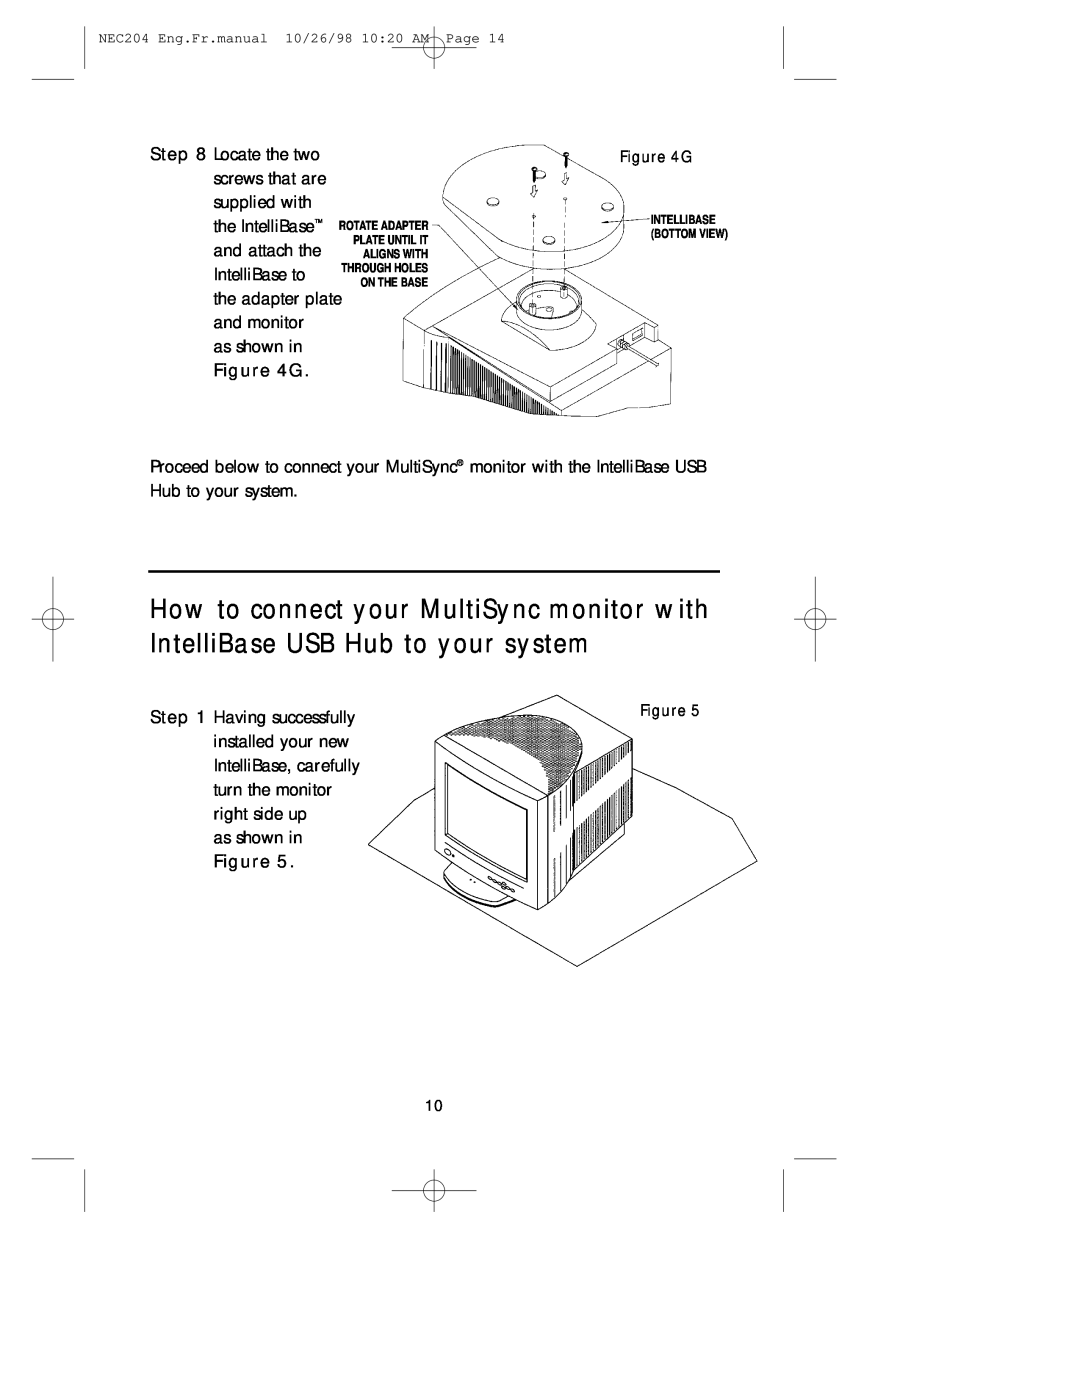 NEC IB-USB, A3844 user manual G, Figure 